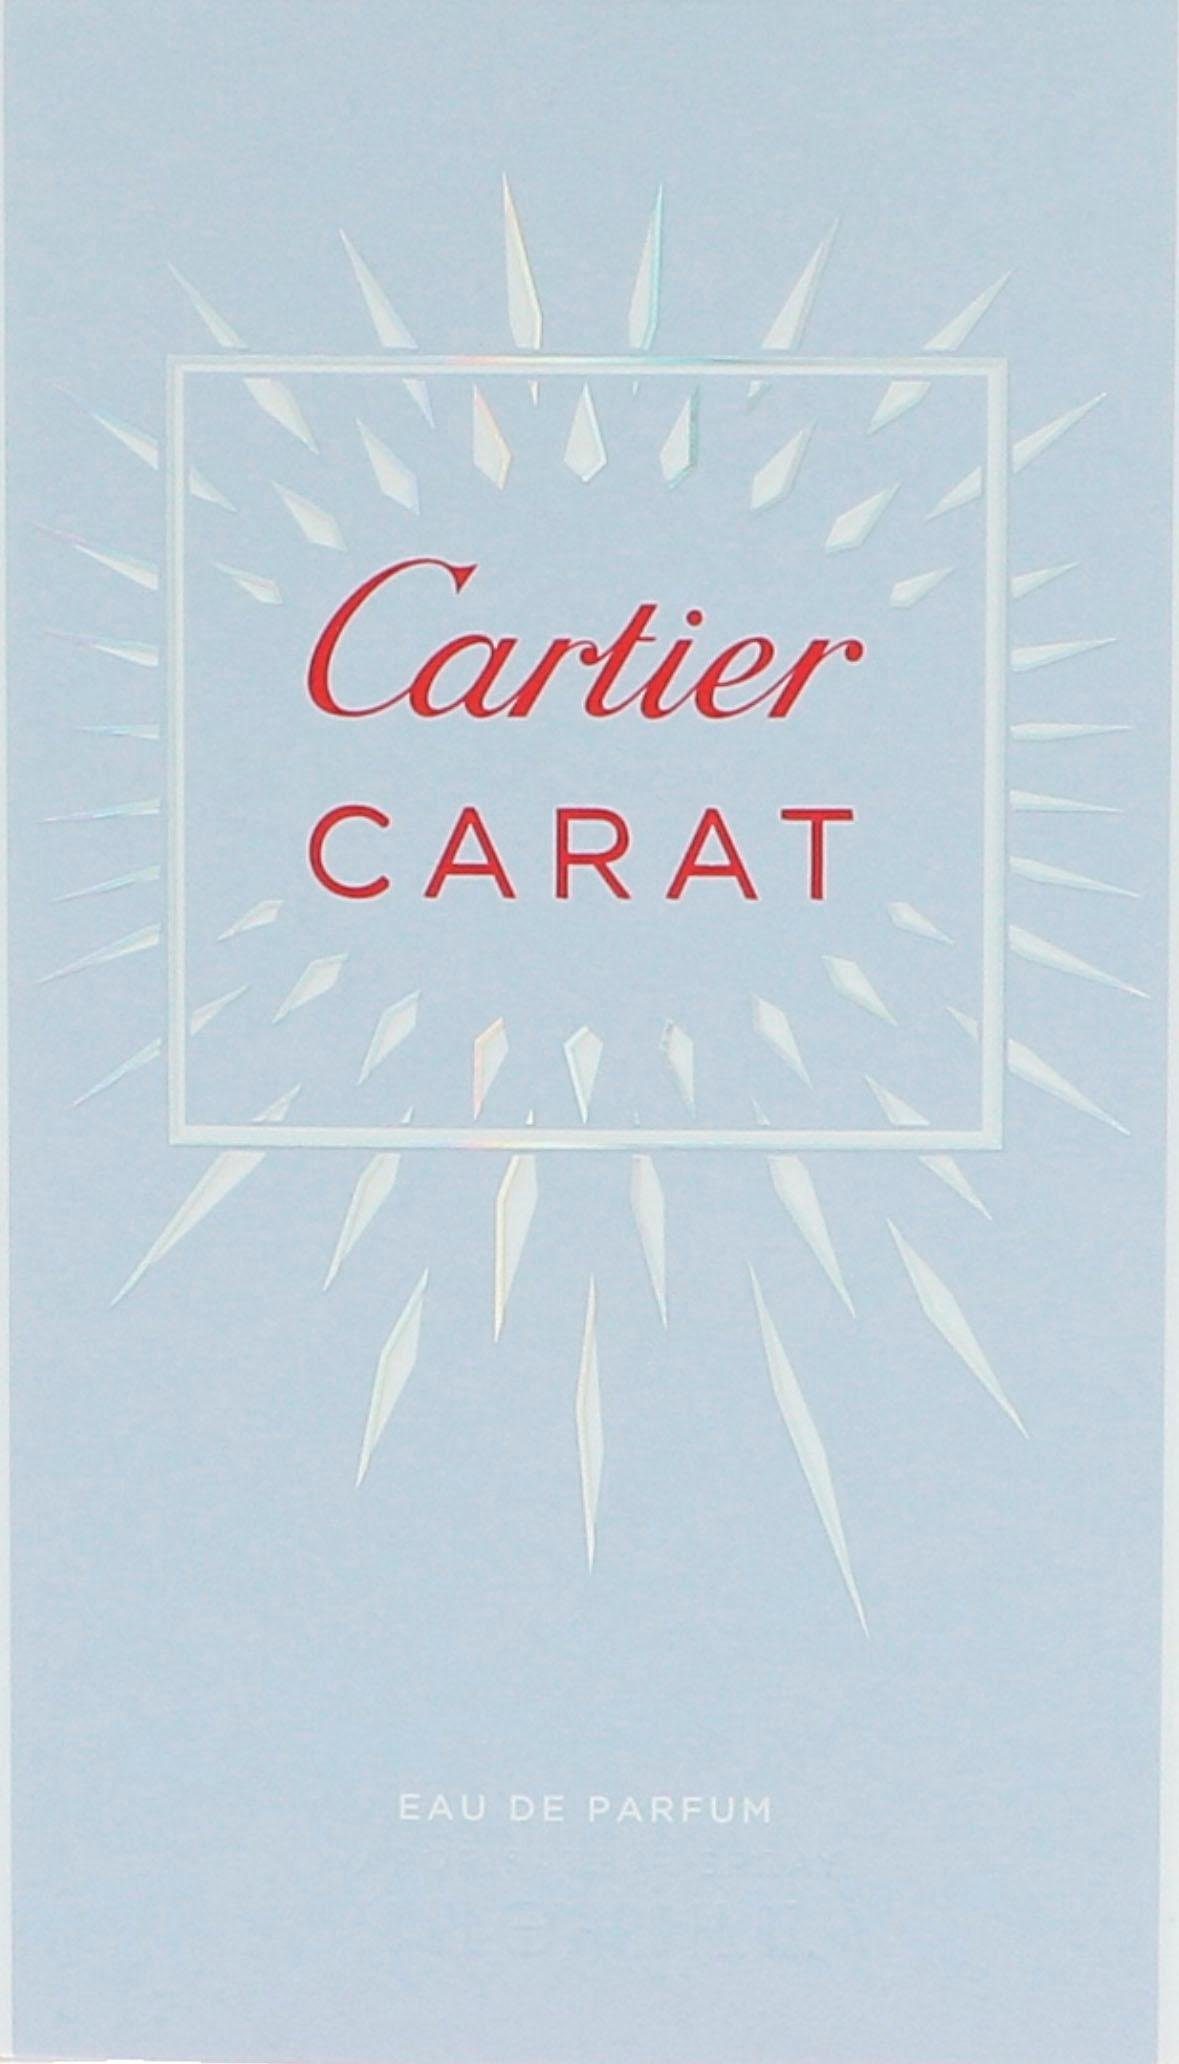 Cartier Eau de Parfum Cartier Carat